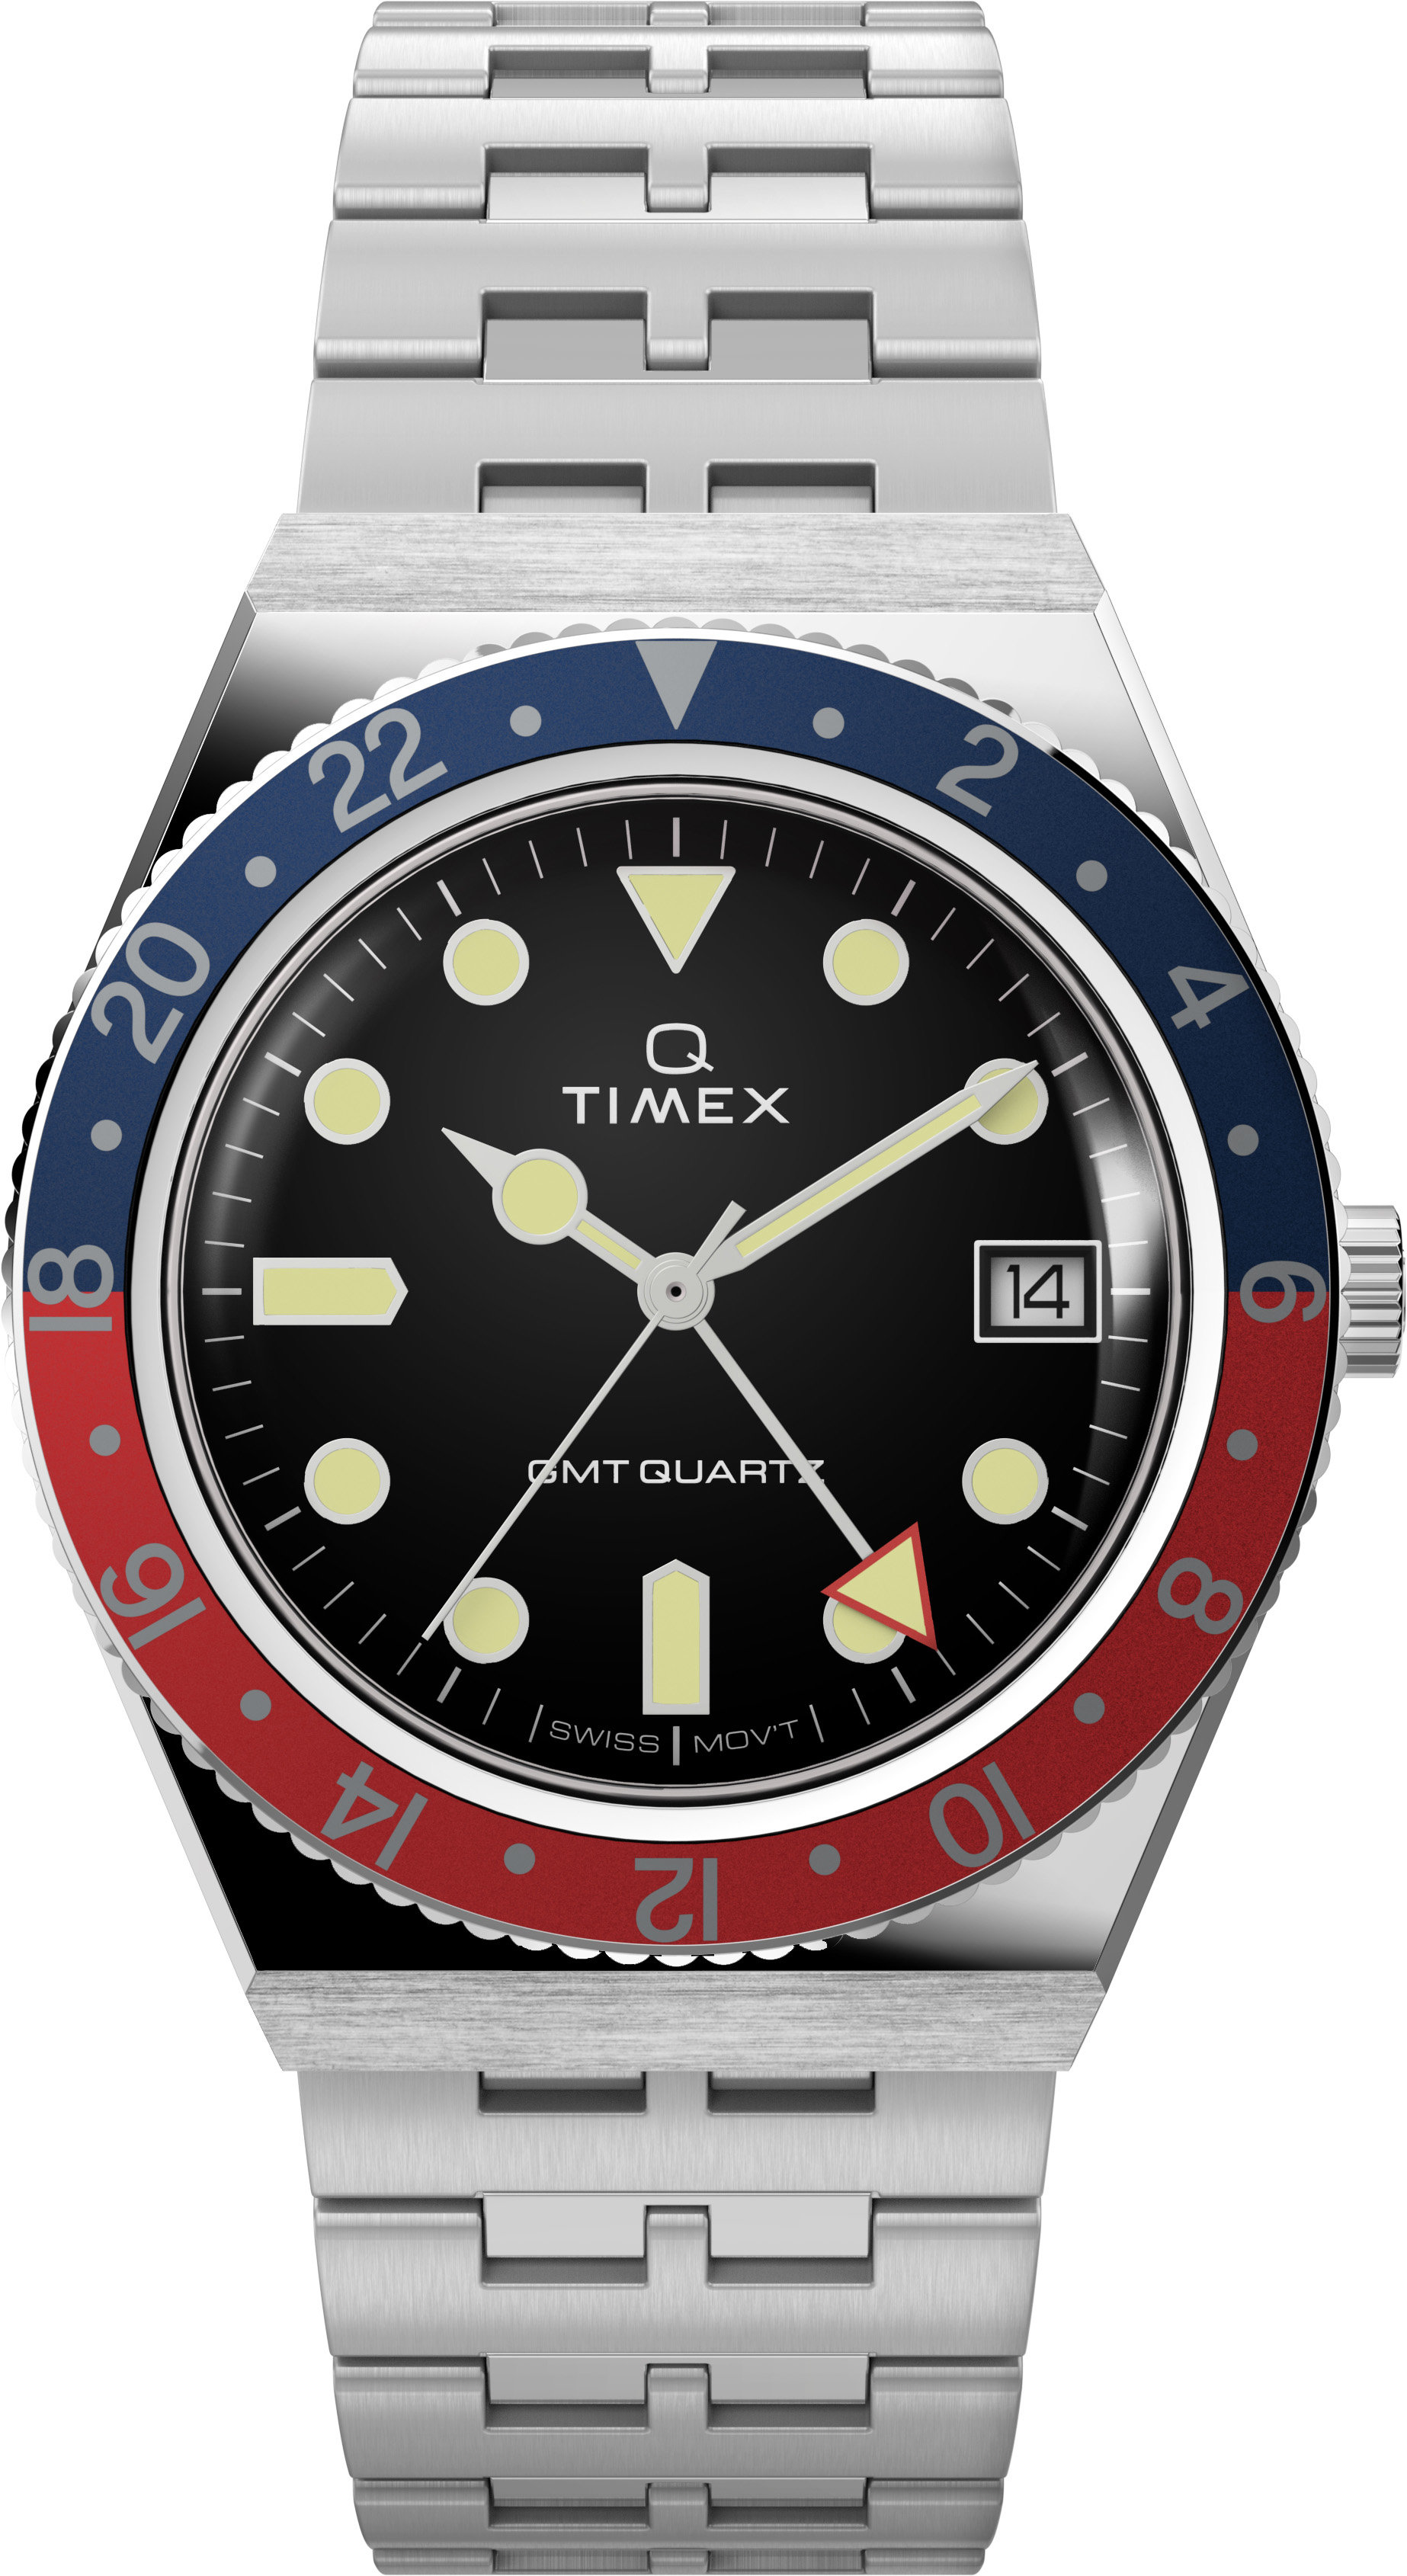 TIMEX、人気シリーズ「Q TIMEX」にGMT機能を追加した「Q TIMEX GMT」が登場！ 3万円台で購入できる本格クォーツ式ウォッチ